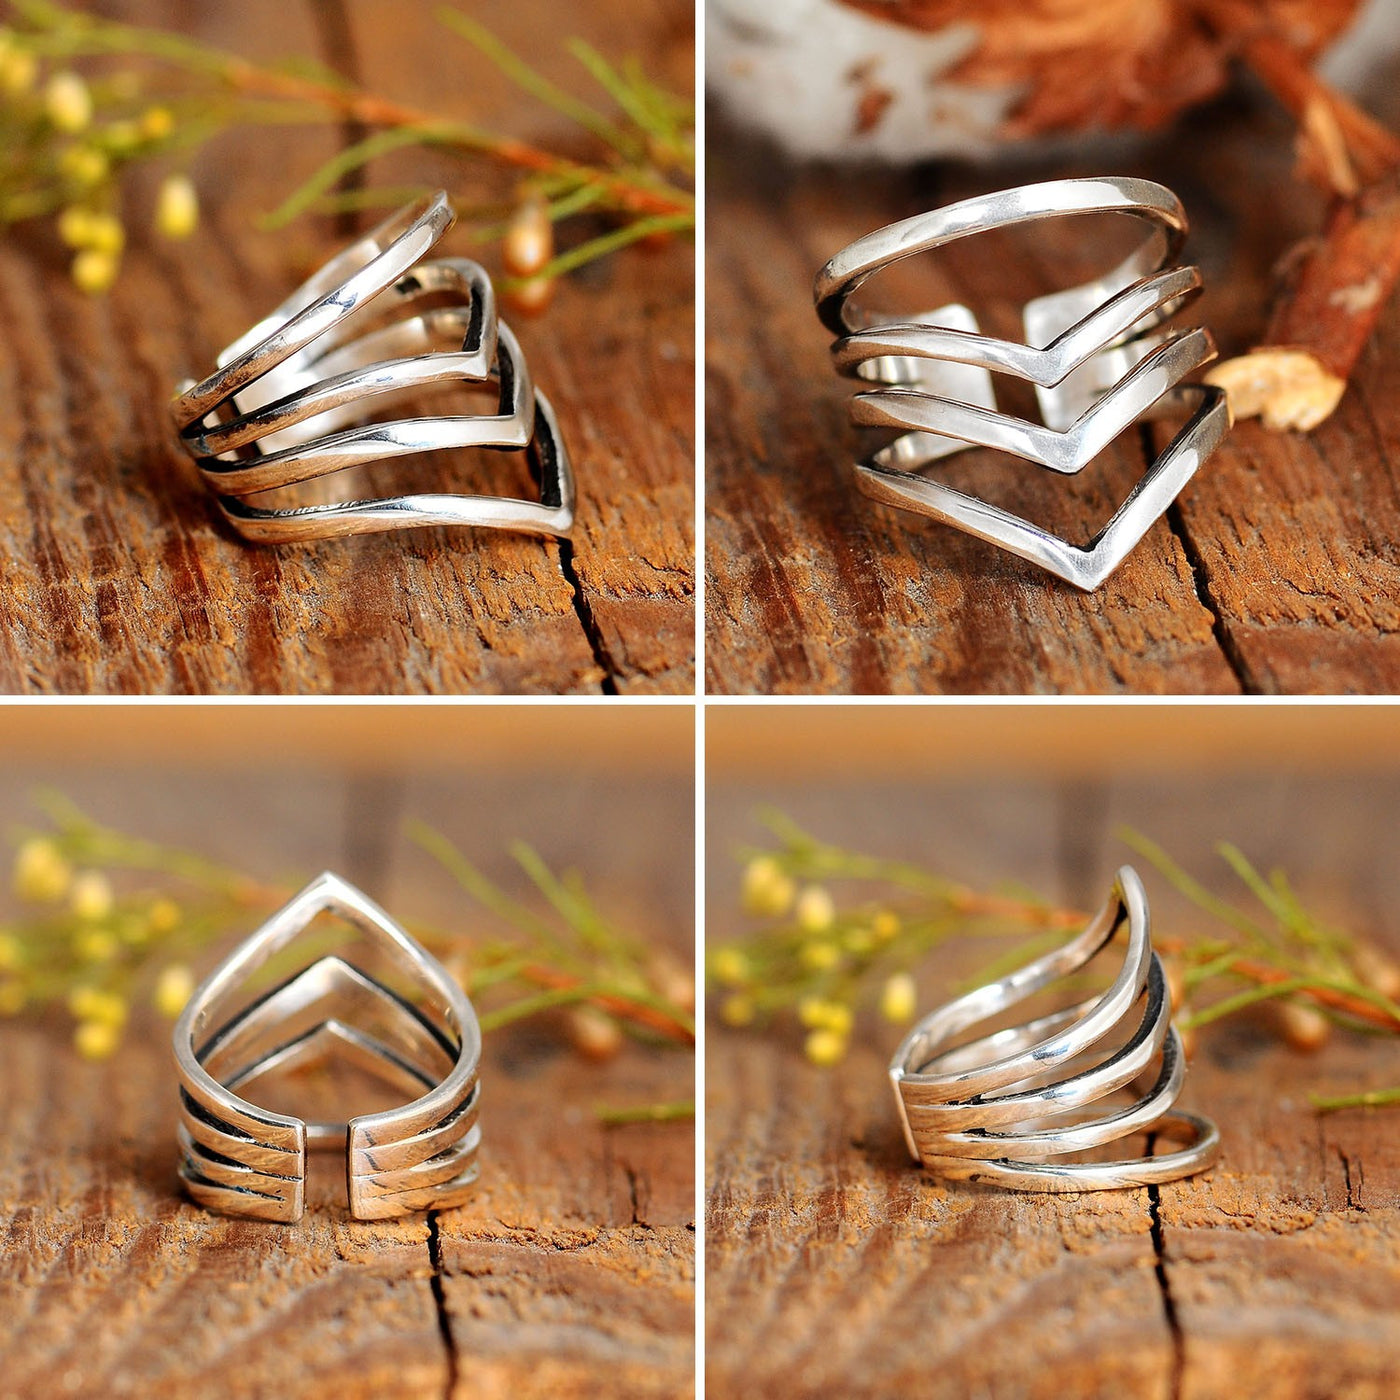 Triple Chevron Sterling Silver Ring for Women